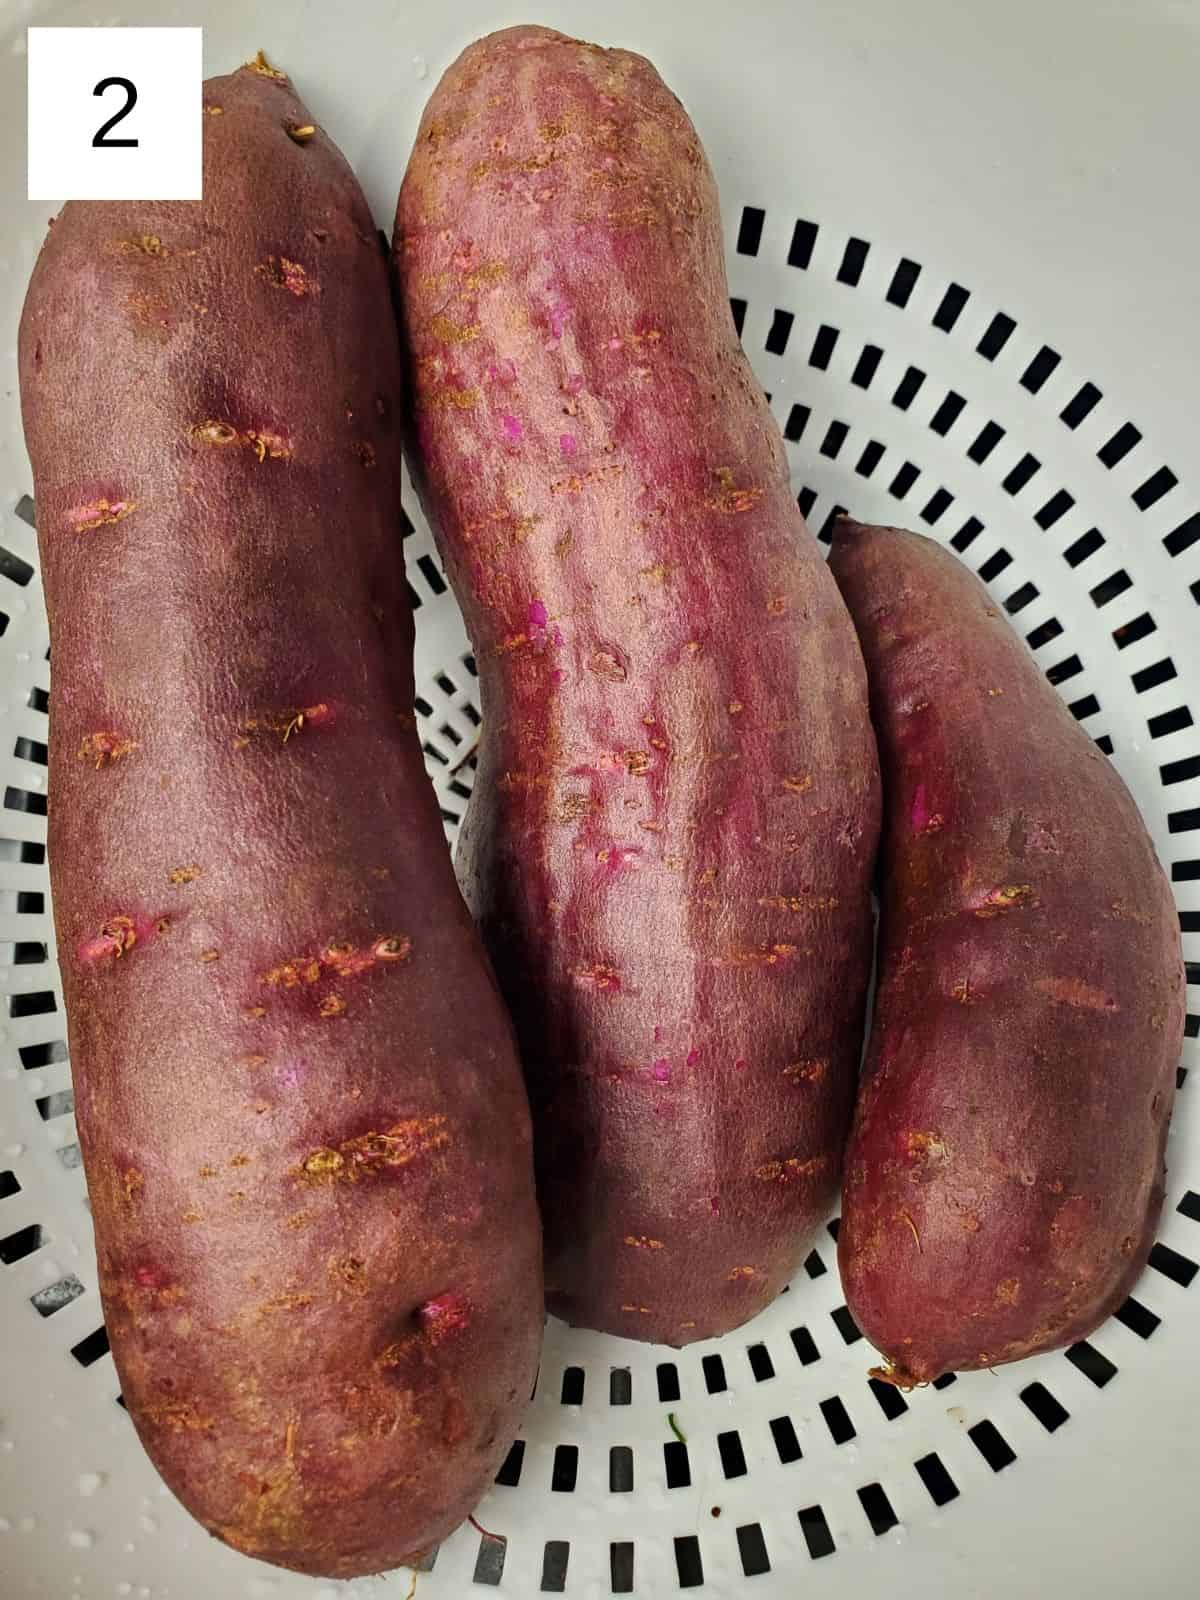 three fresh purple sweet potatoes in a plastic strainer.